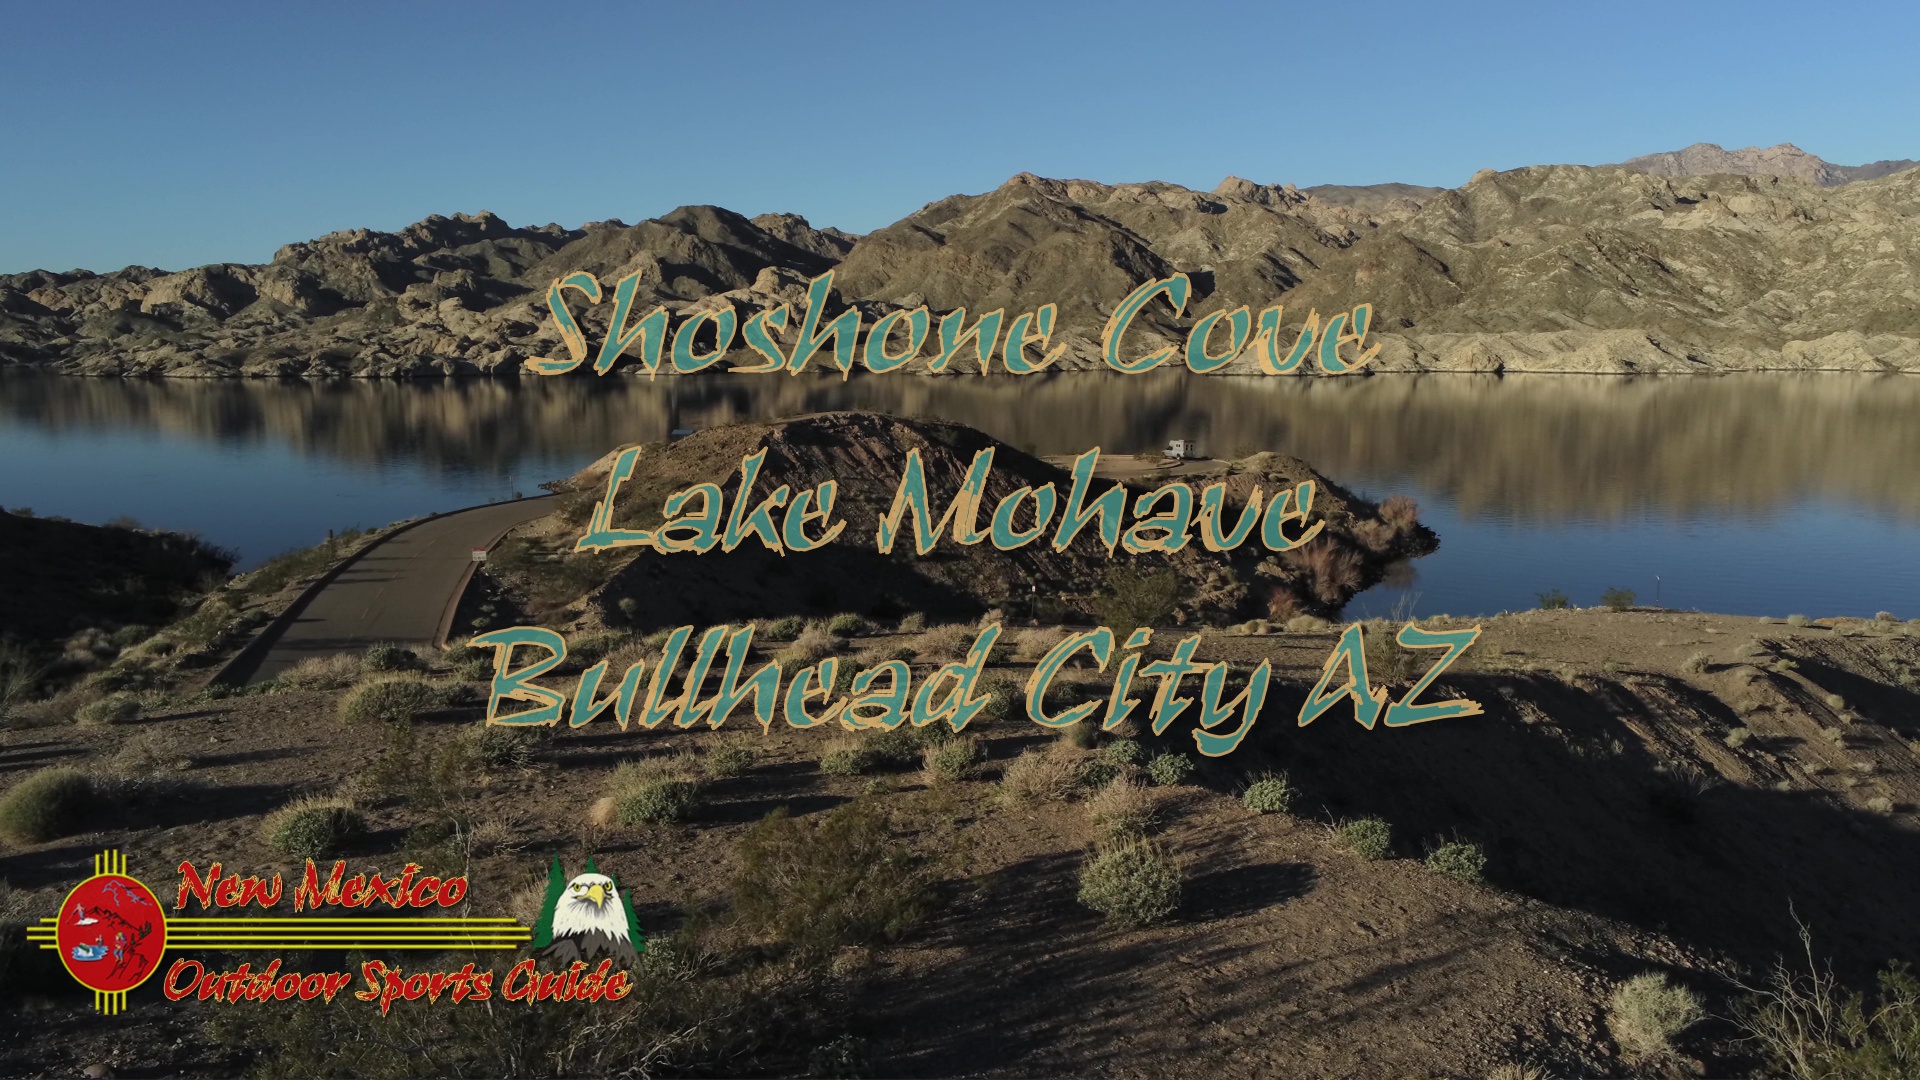 Shoshone Cove Lake Mohave